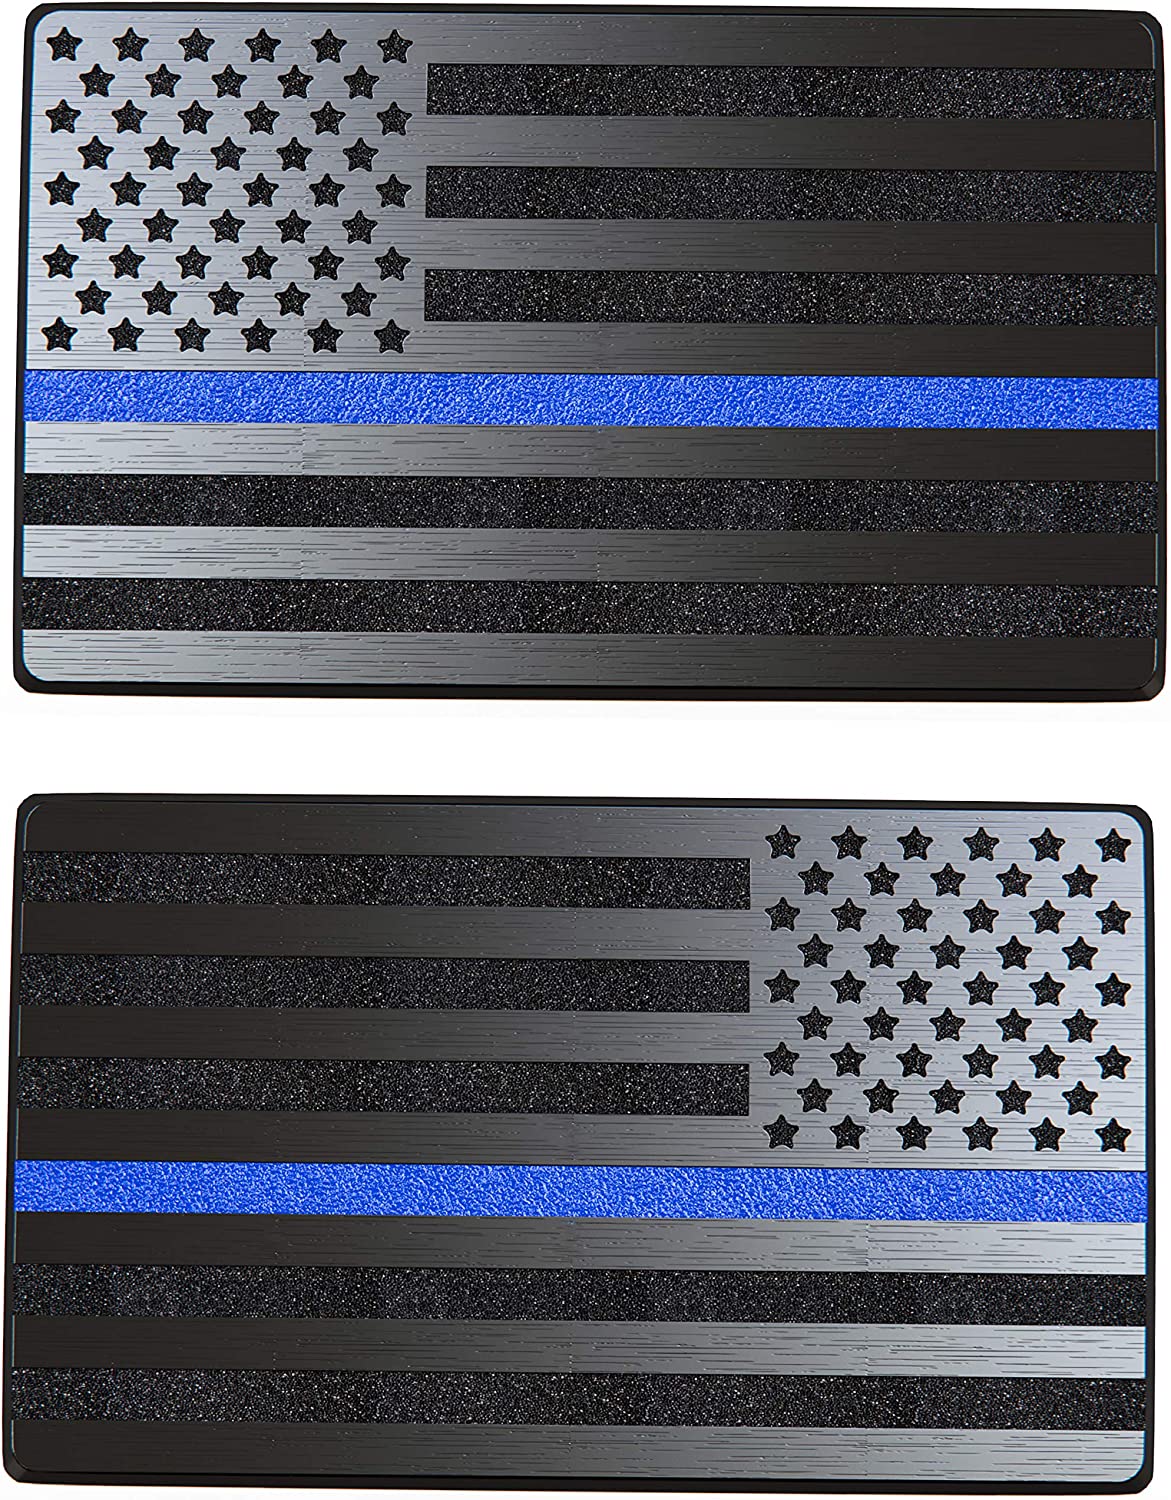 USA 3D Metal Flag Auto Emblem for Cars Trucks 2pcs Forward and Reverse Set (5"x3", Blue Line)